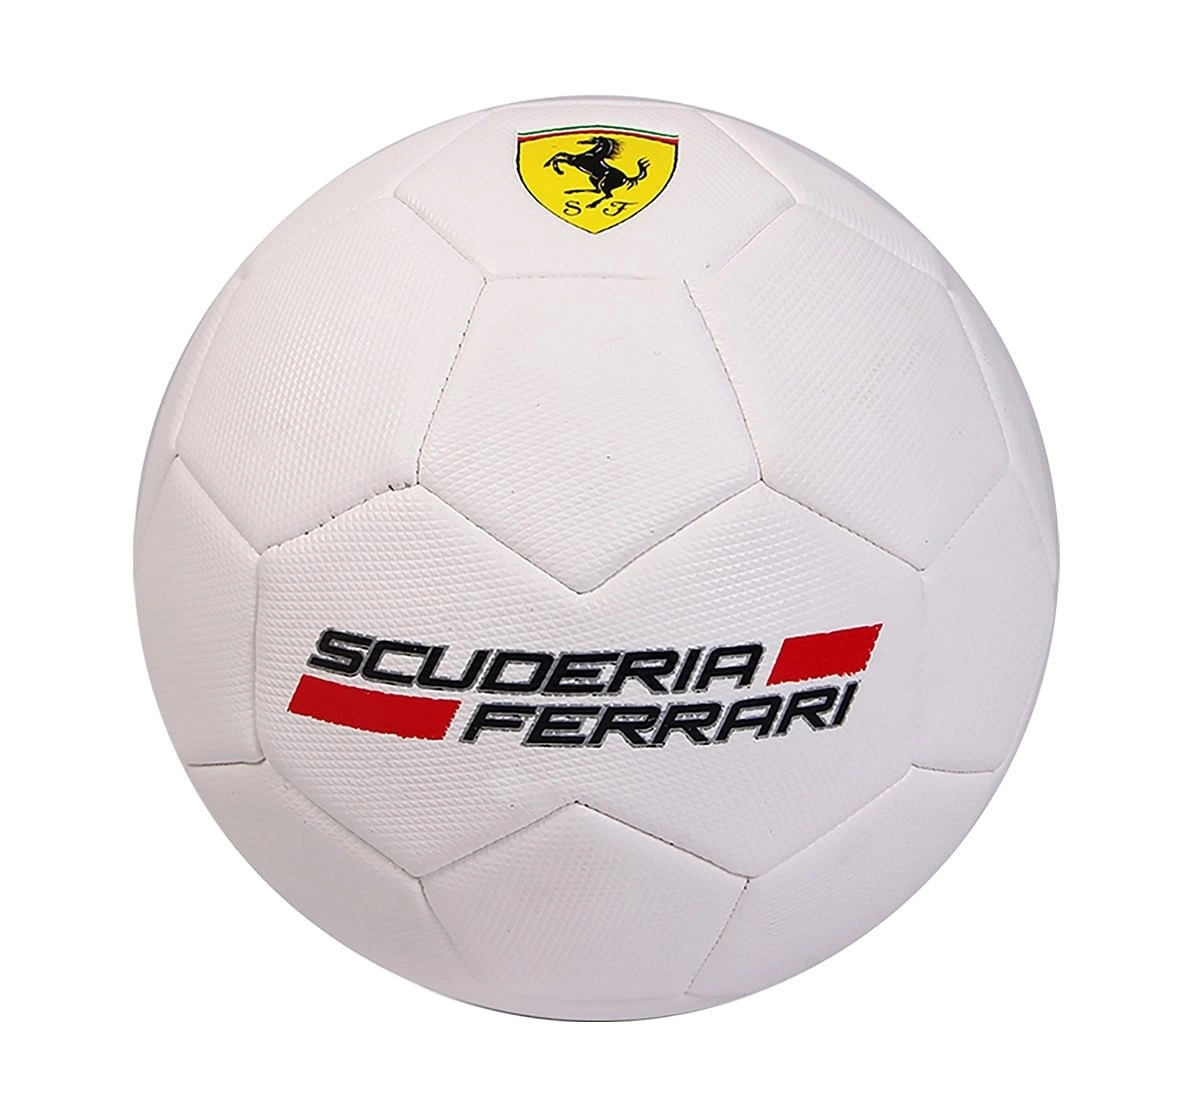 Ferrari Soccer Ball - Sports & Accessories for Kids age 5Y+ (White)